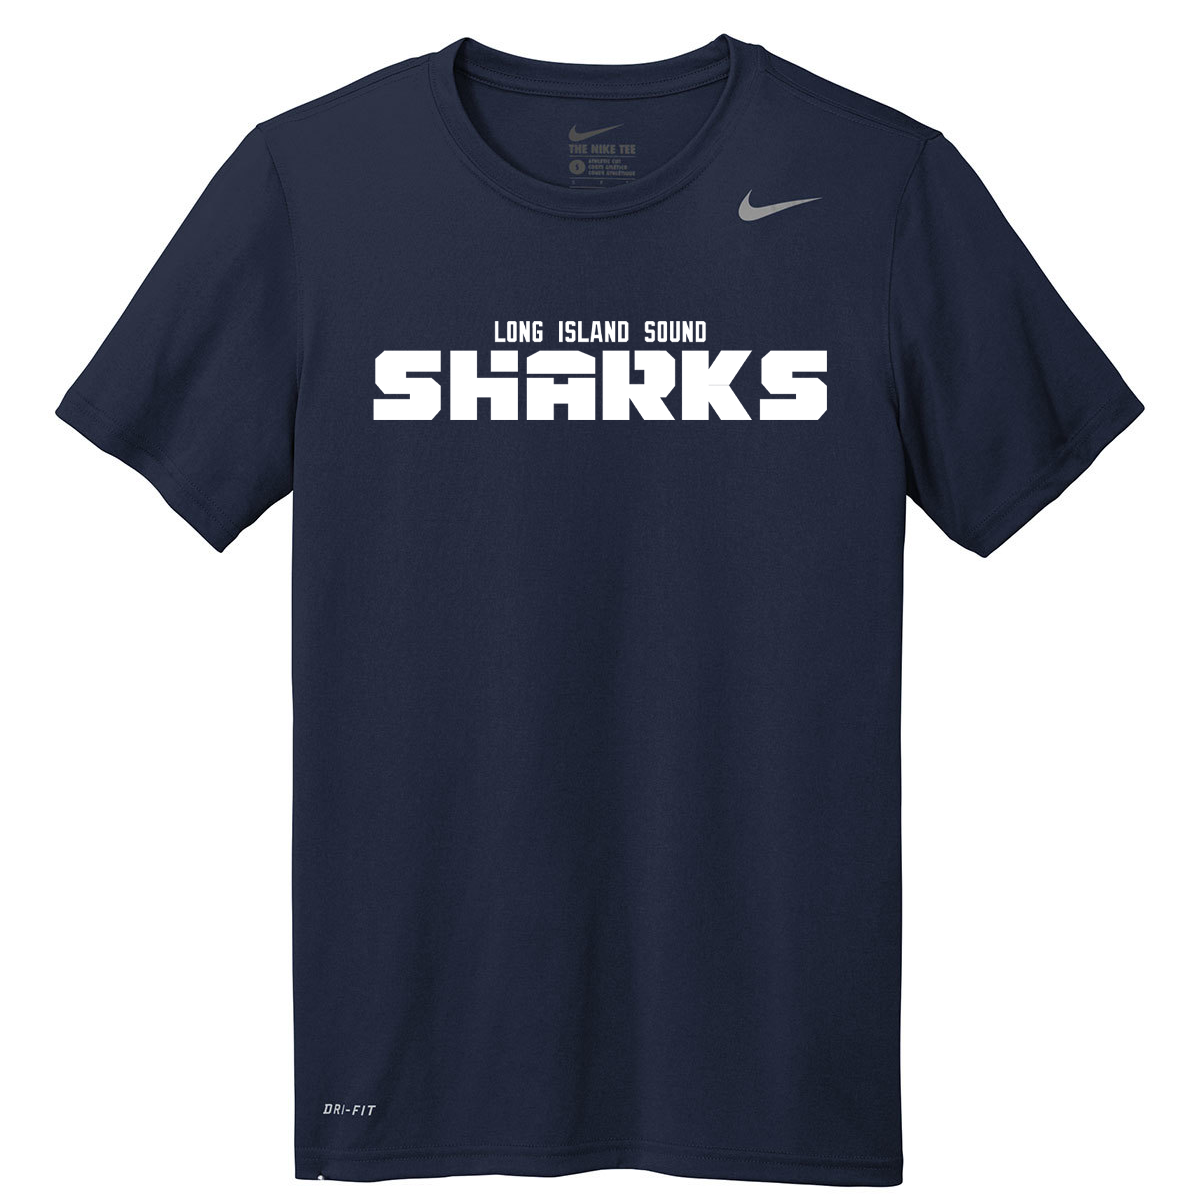 Long Island Sound Sharks Football Nike rLegend Tee